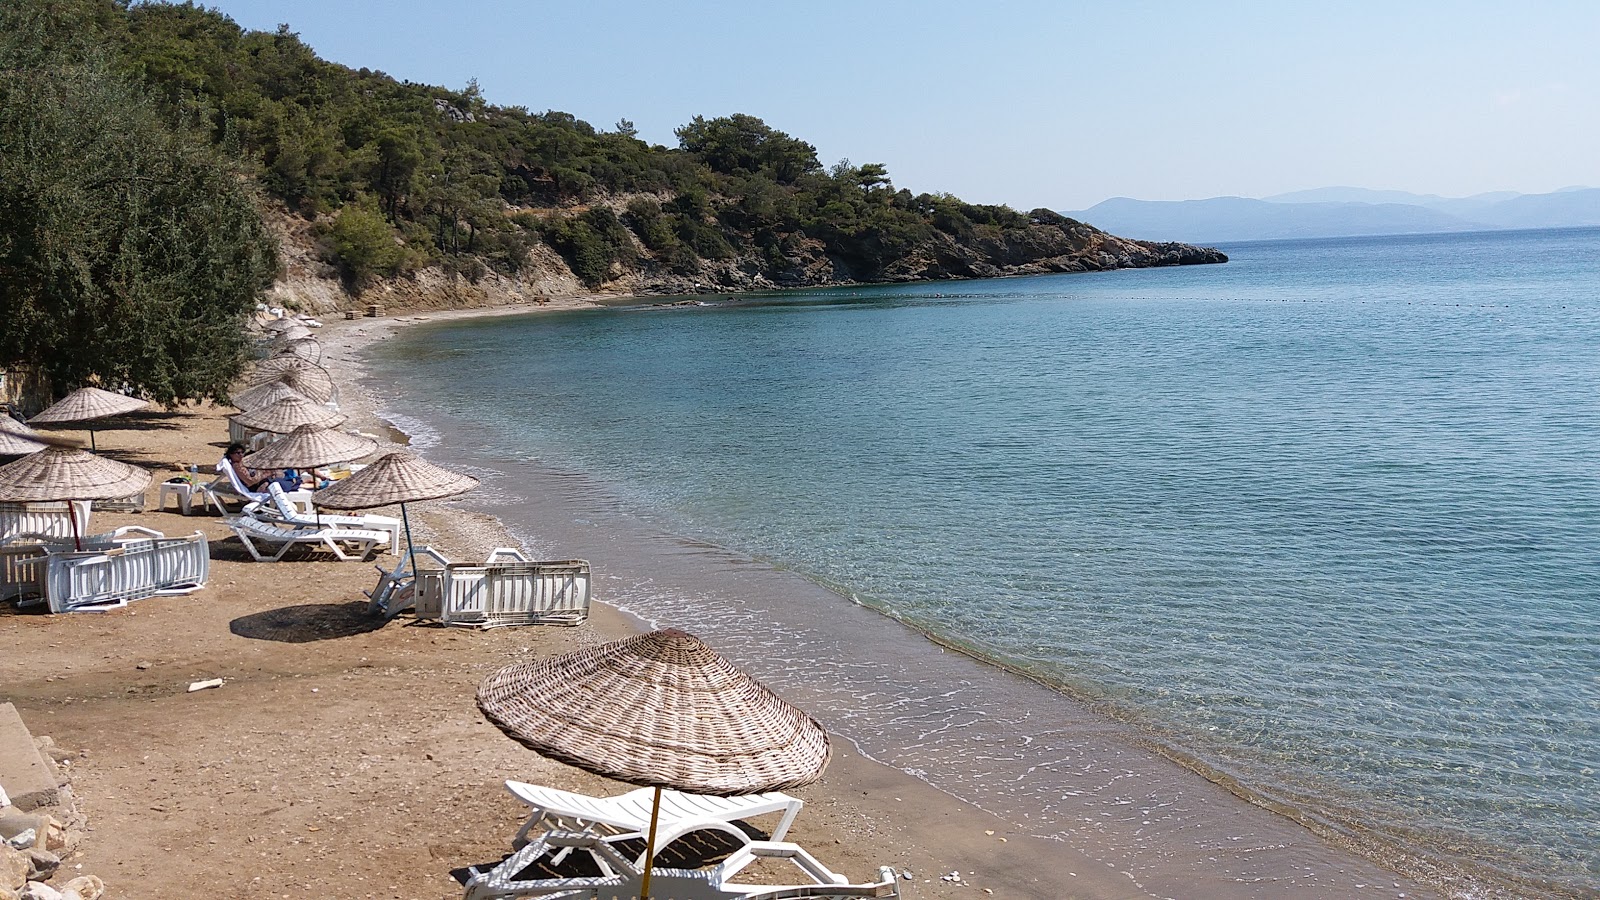 Photo of Ahmetbeyli Plaji III beach resort area